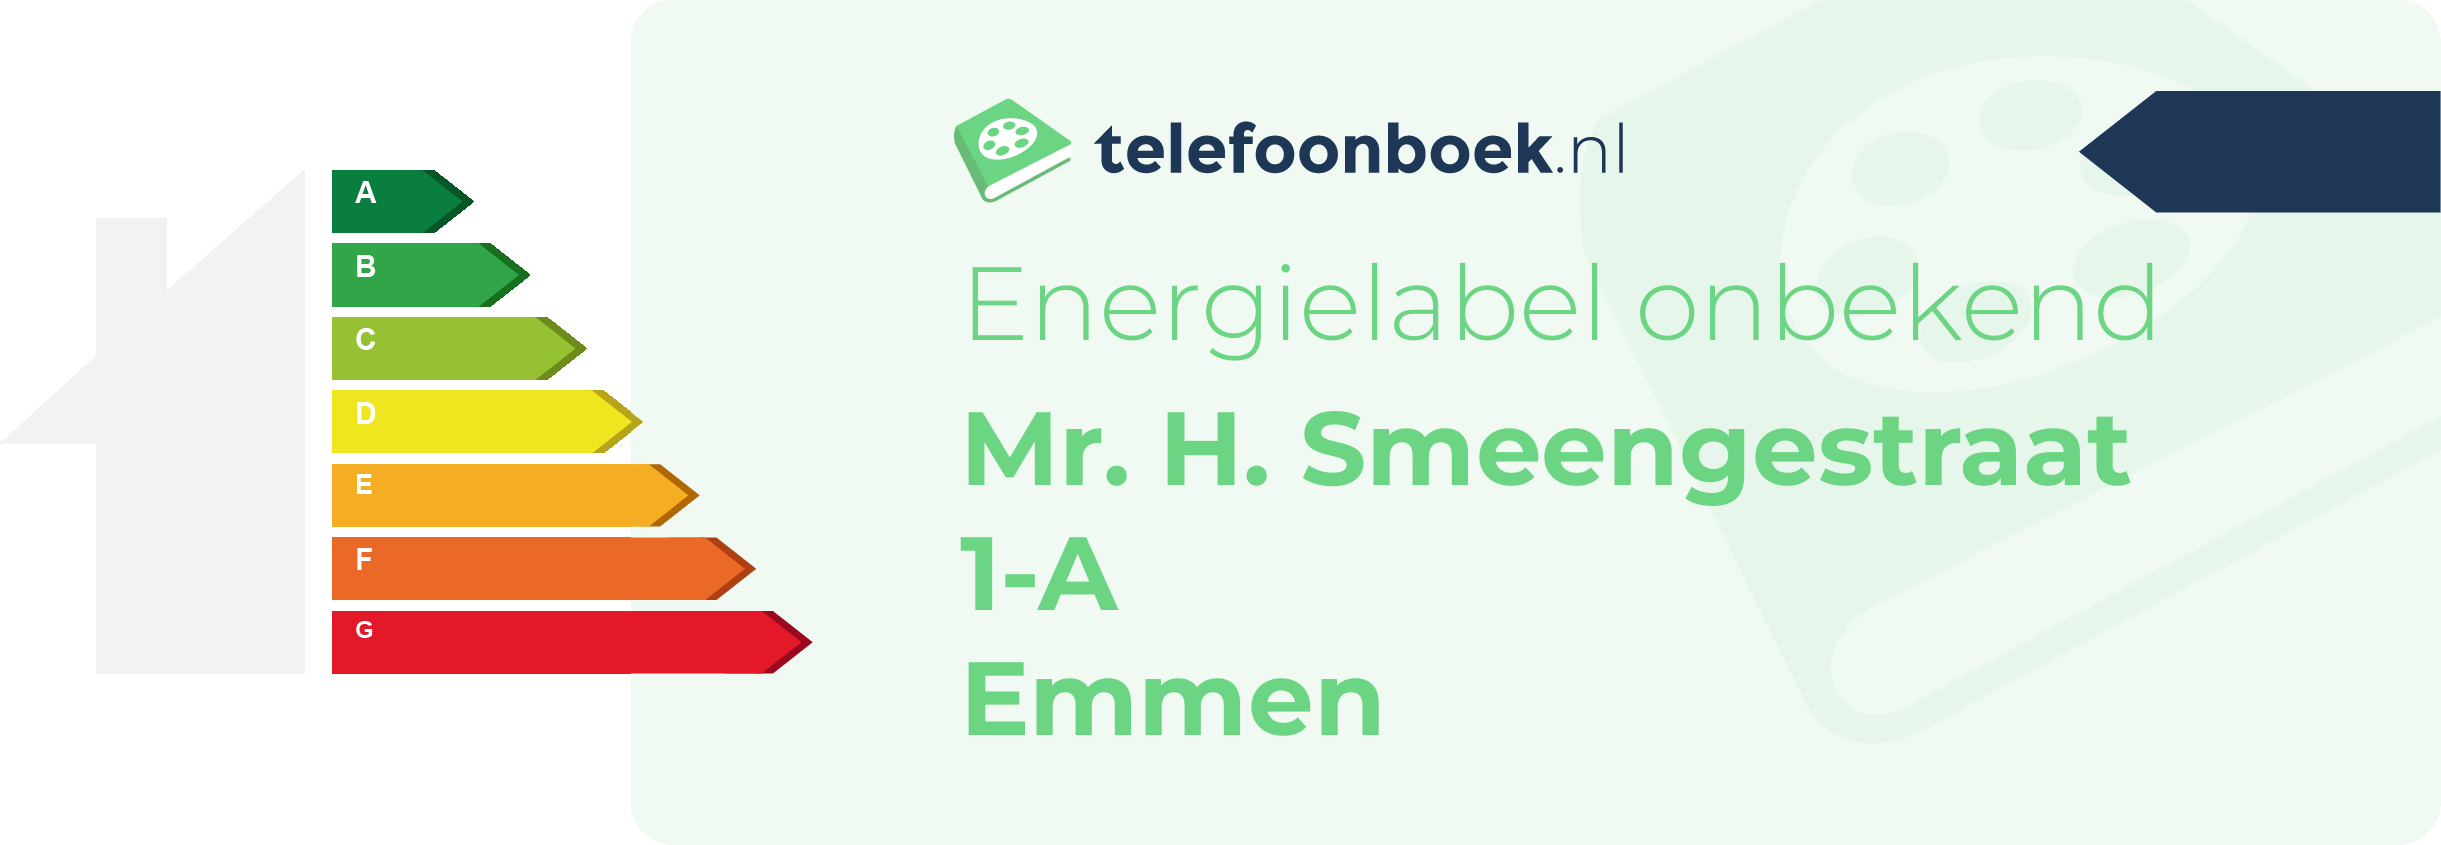 Energielabel Mr. H. Smeengestraat 1-A Emmen